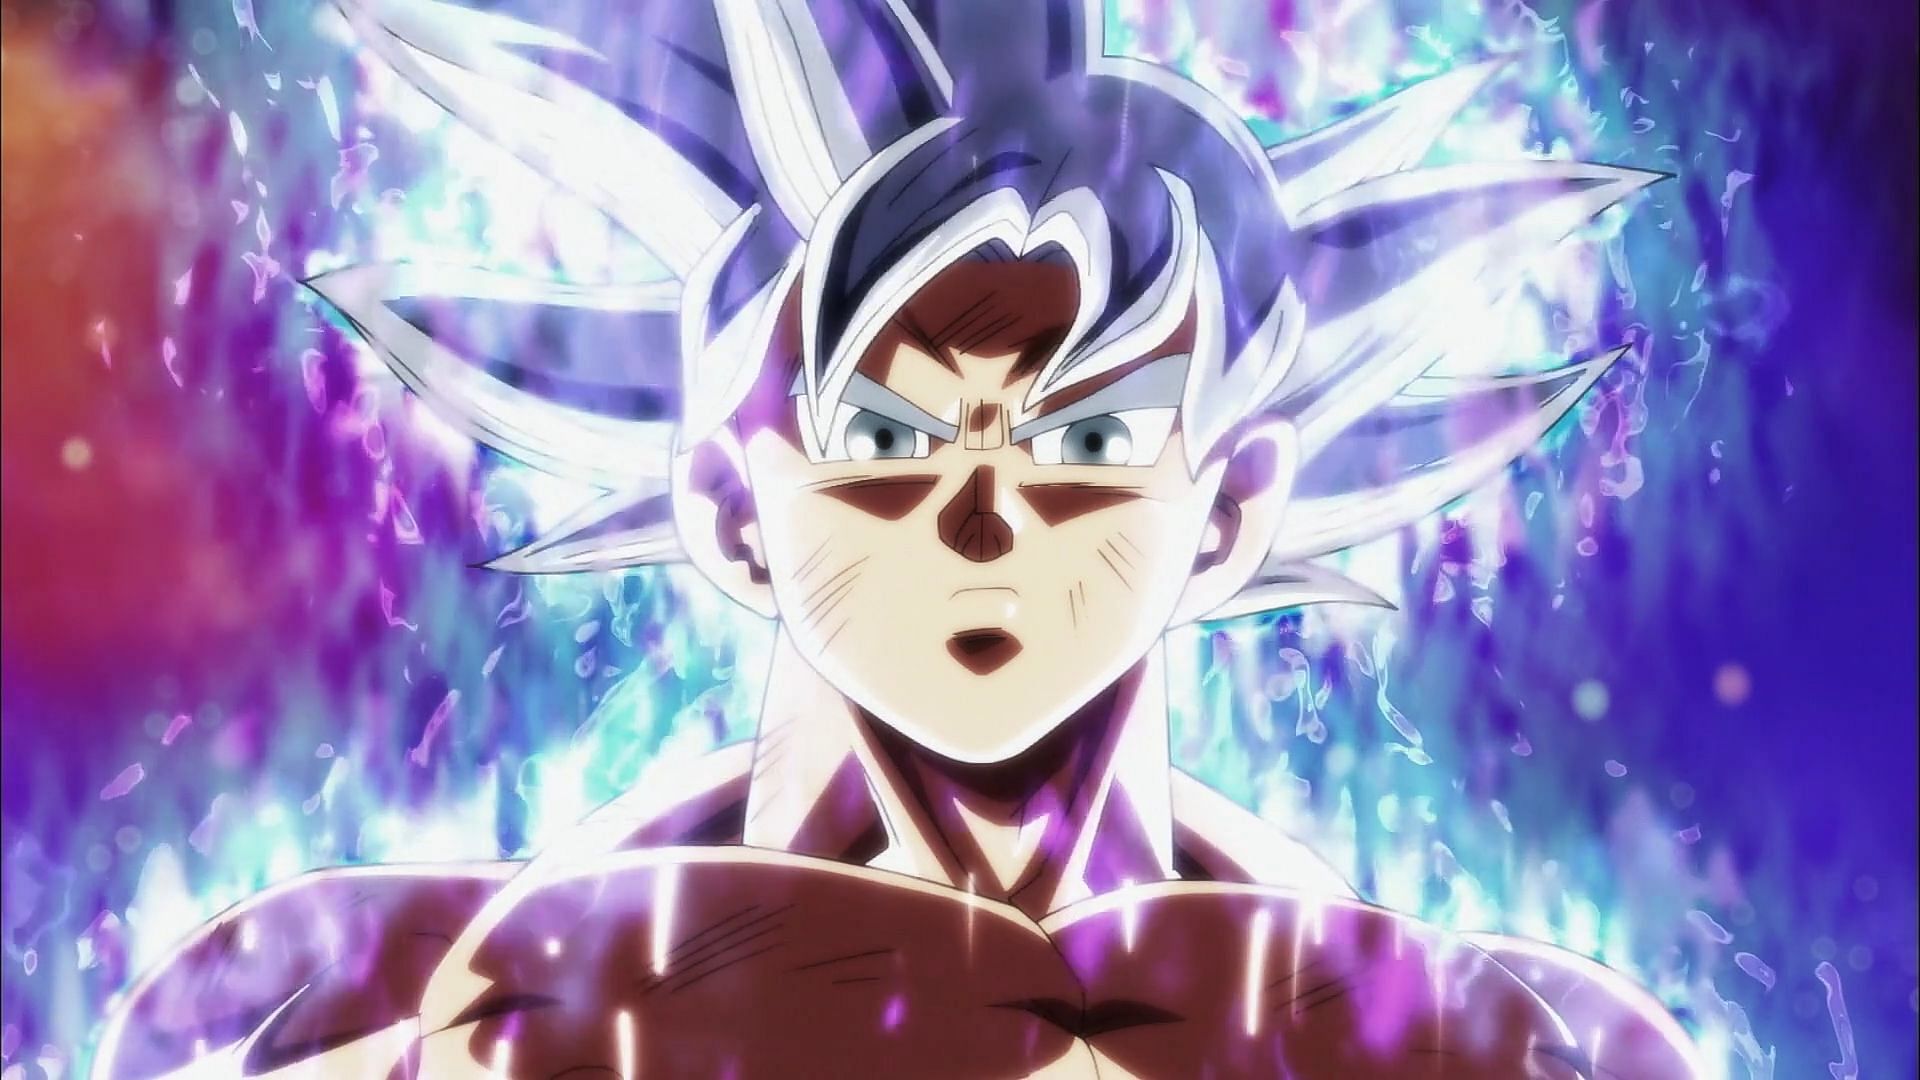 Mastered Ultra Instinct Goku as seen in the Dragon Ball Super anime (Image via Toei Animation)